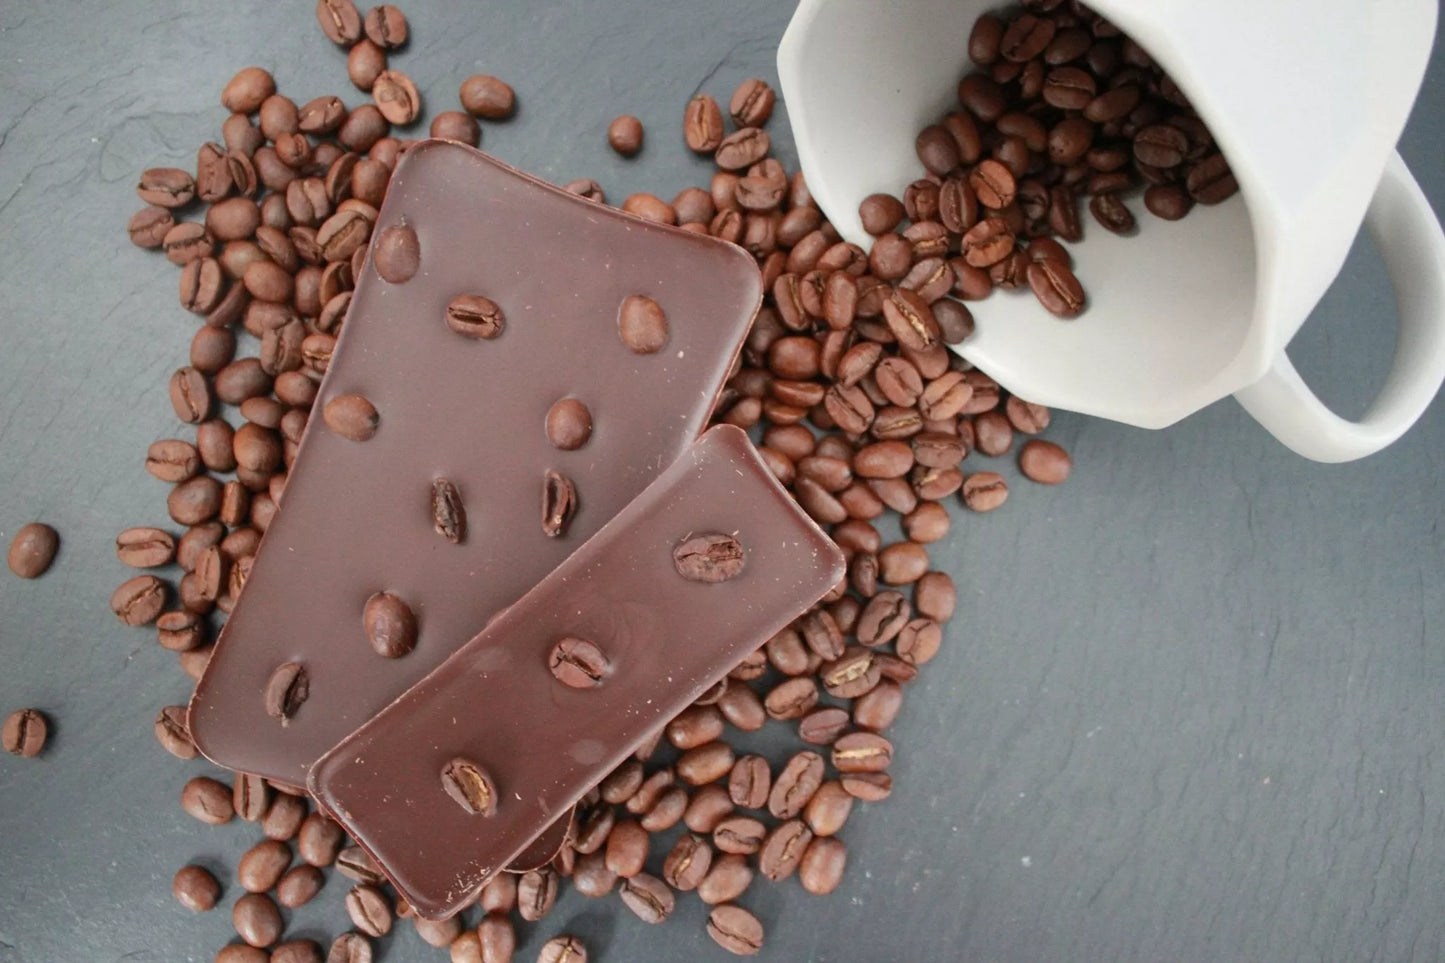 Cappuccino Crunch Rice Milk Chocolate Coffee Slab | 100g Dairy Free Vegan - Cocoa Libre